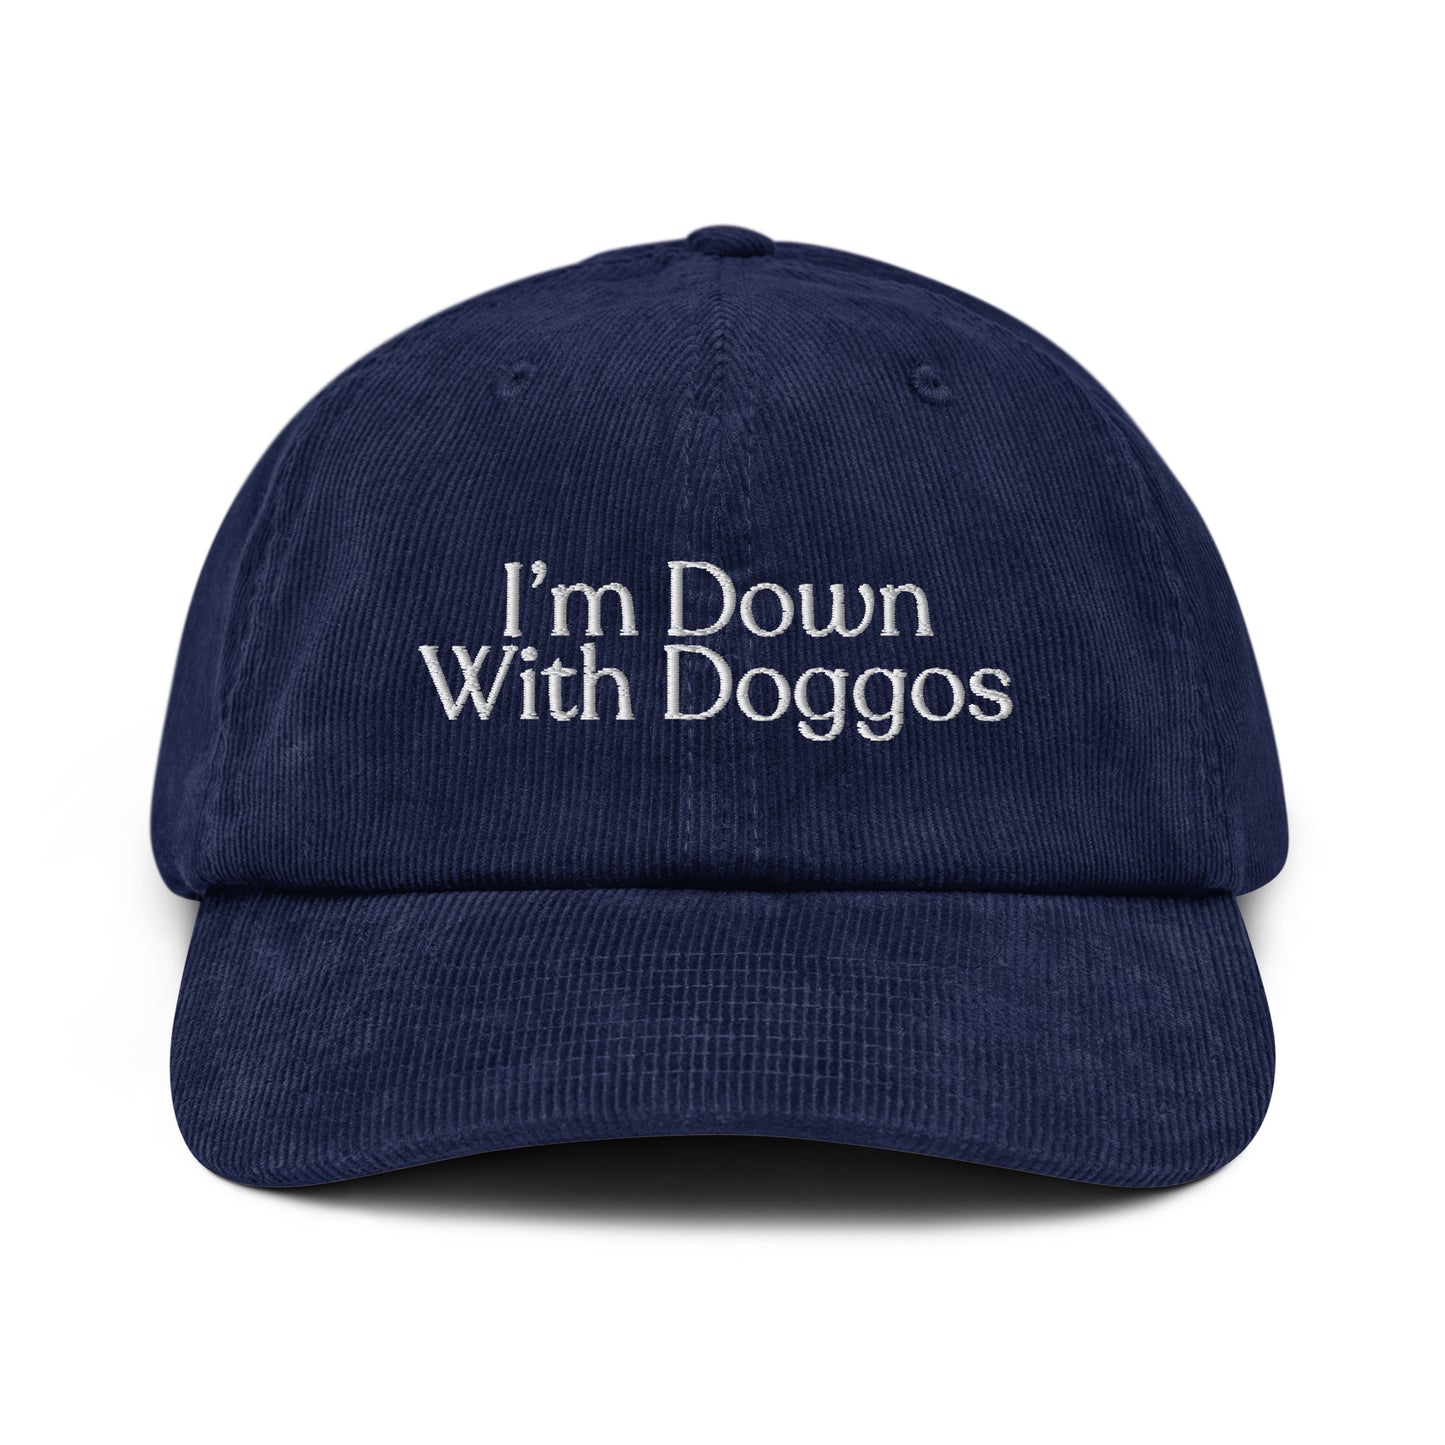 I'm Down With Doggos Corduroy hat